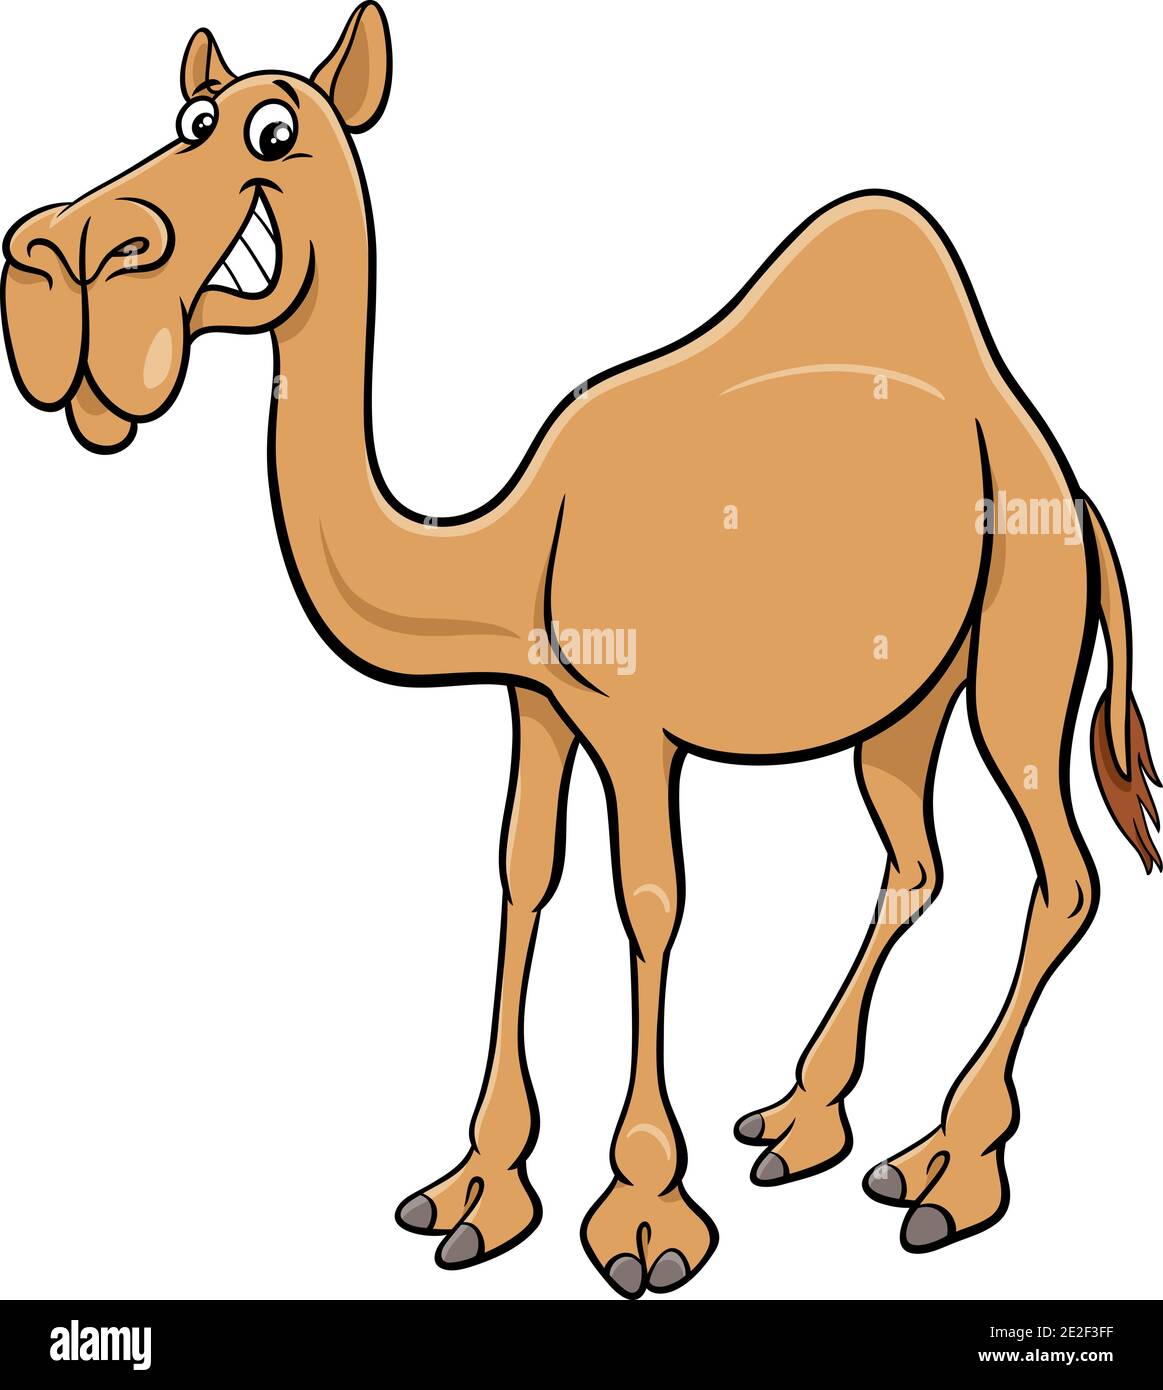 Cartoon illustration of dromedary camel comic animal character Stock Vector